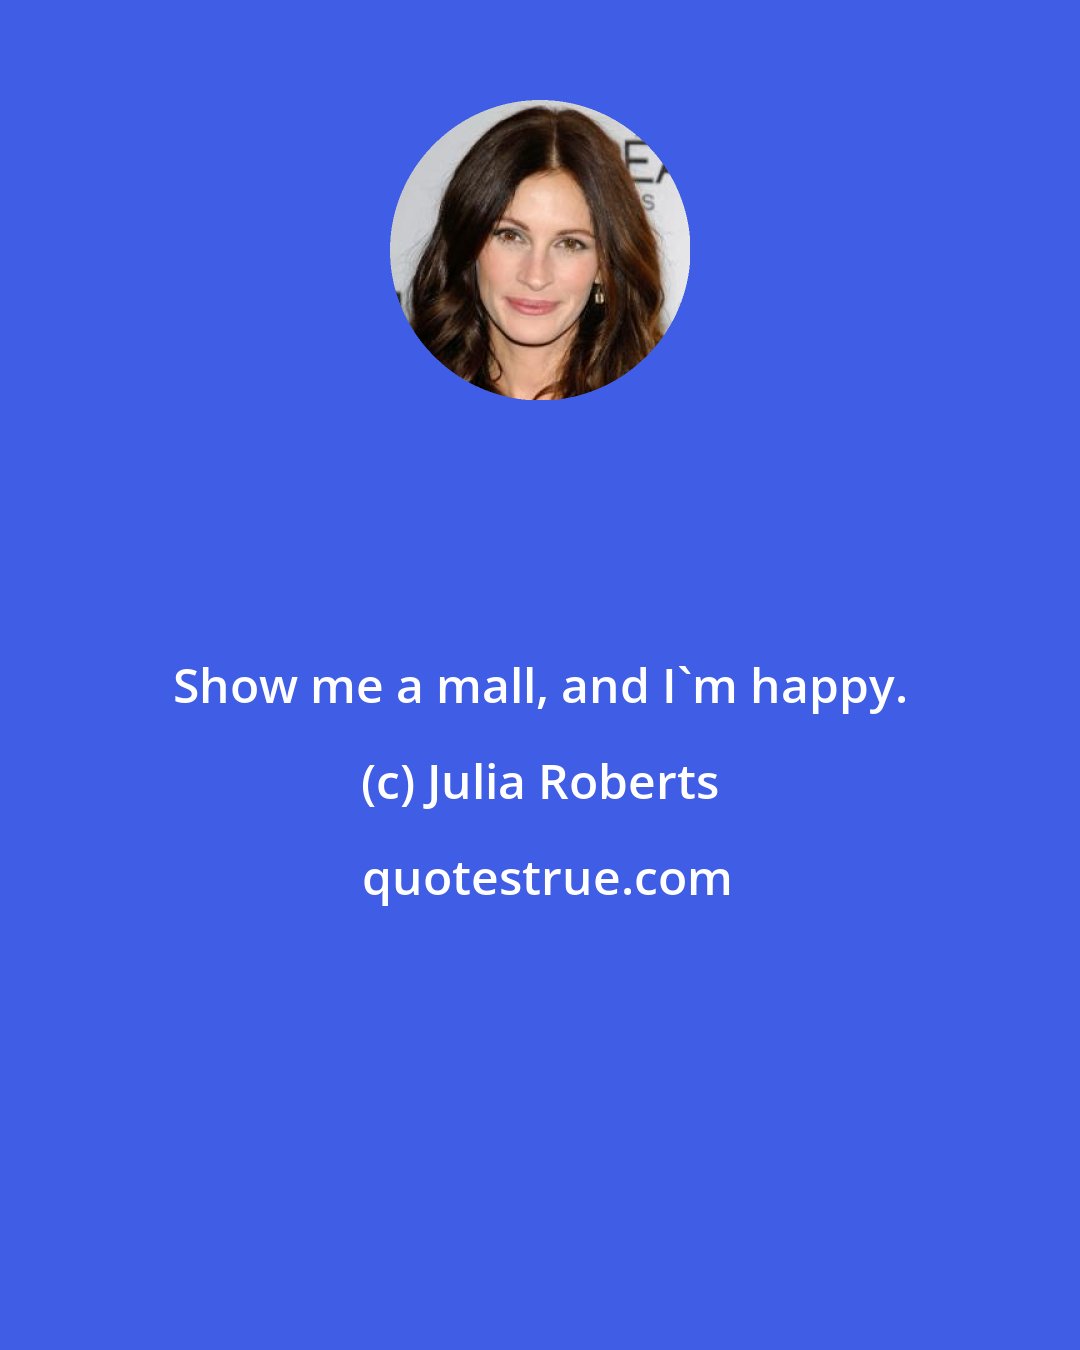 Julia Roberts: Show me a mall, and I'm happy.